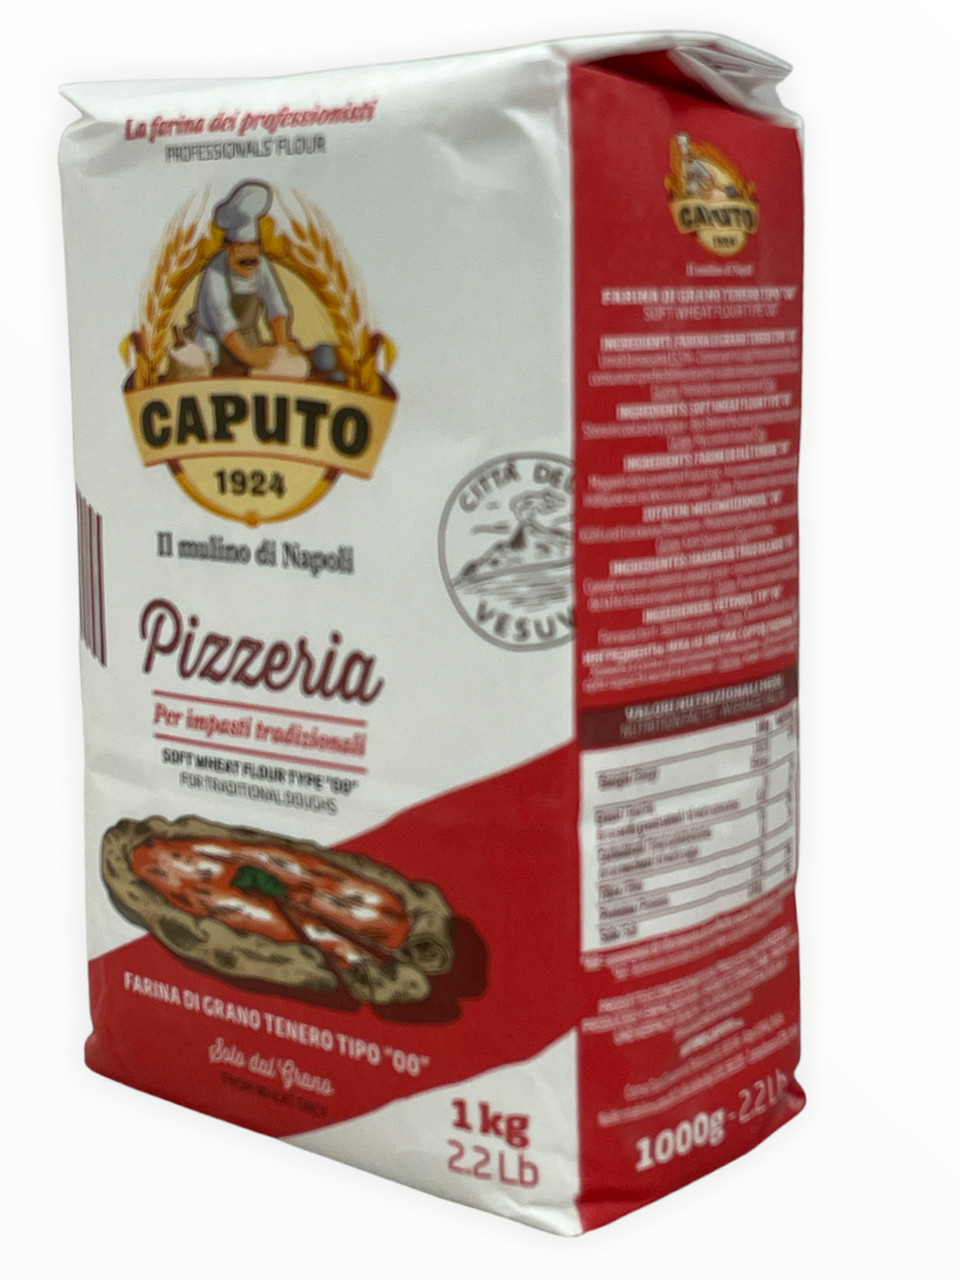 Caputo “00” Chefs Flour (2 Bags 2.2 lbs each)